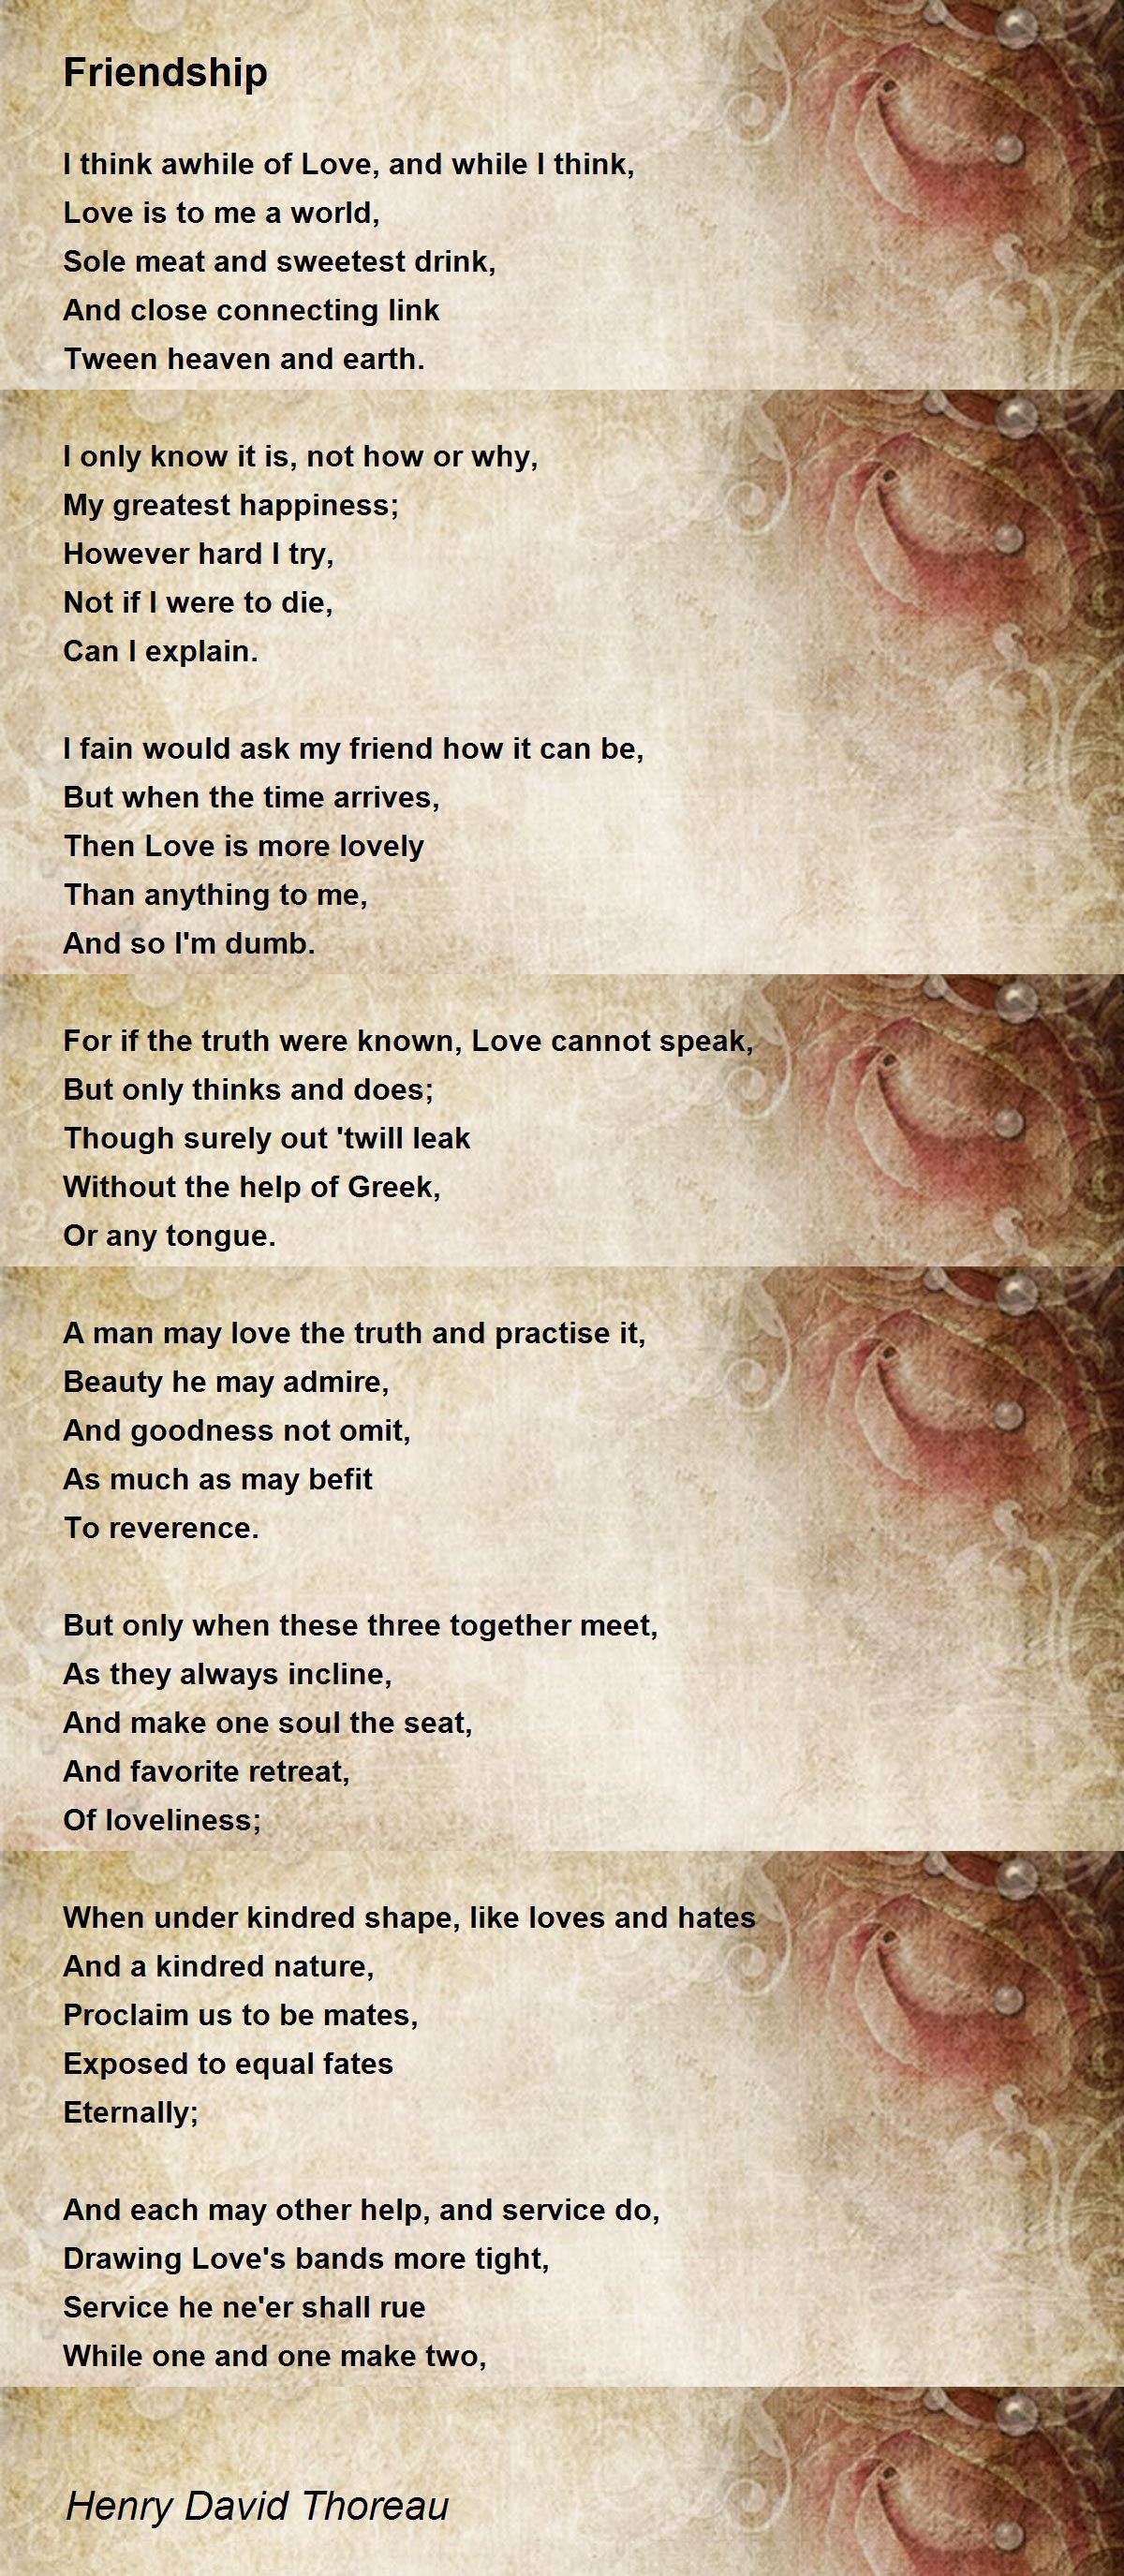 Friendship Poem by Henry David Thoreau - Poem Hunter